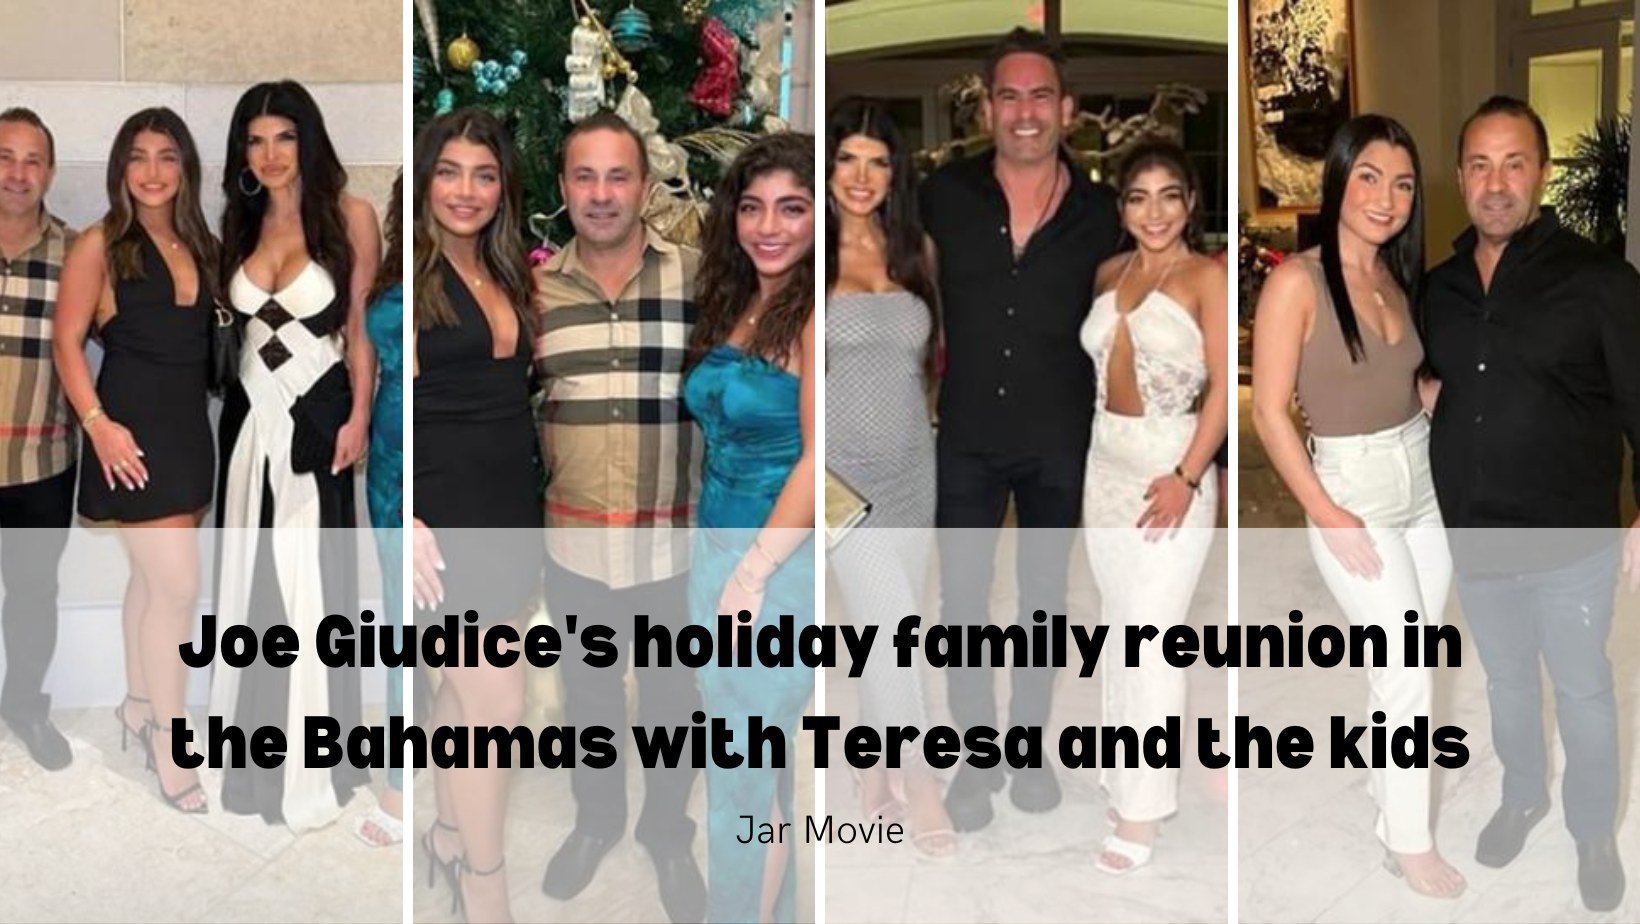 Joe Giudice's holiday family reunion in the Bahamas with Teresa and the kids